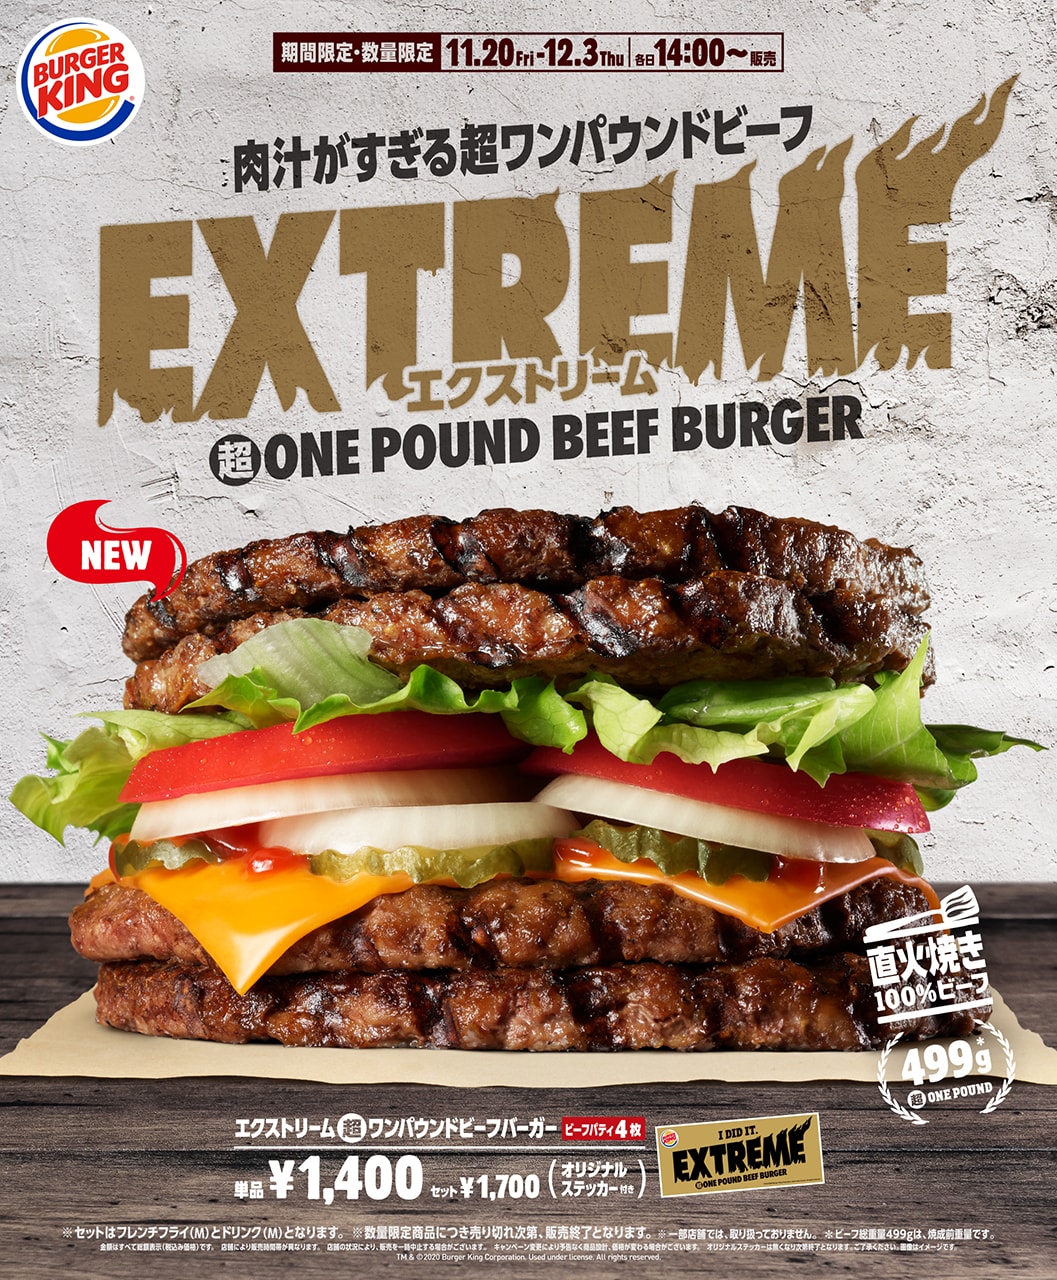 Burger King Japan Extreme Super One Pound Beef Burger maximum patties sandwich bun